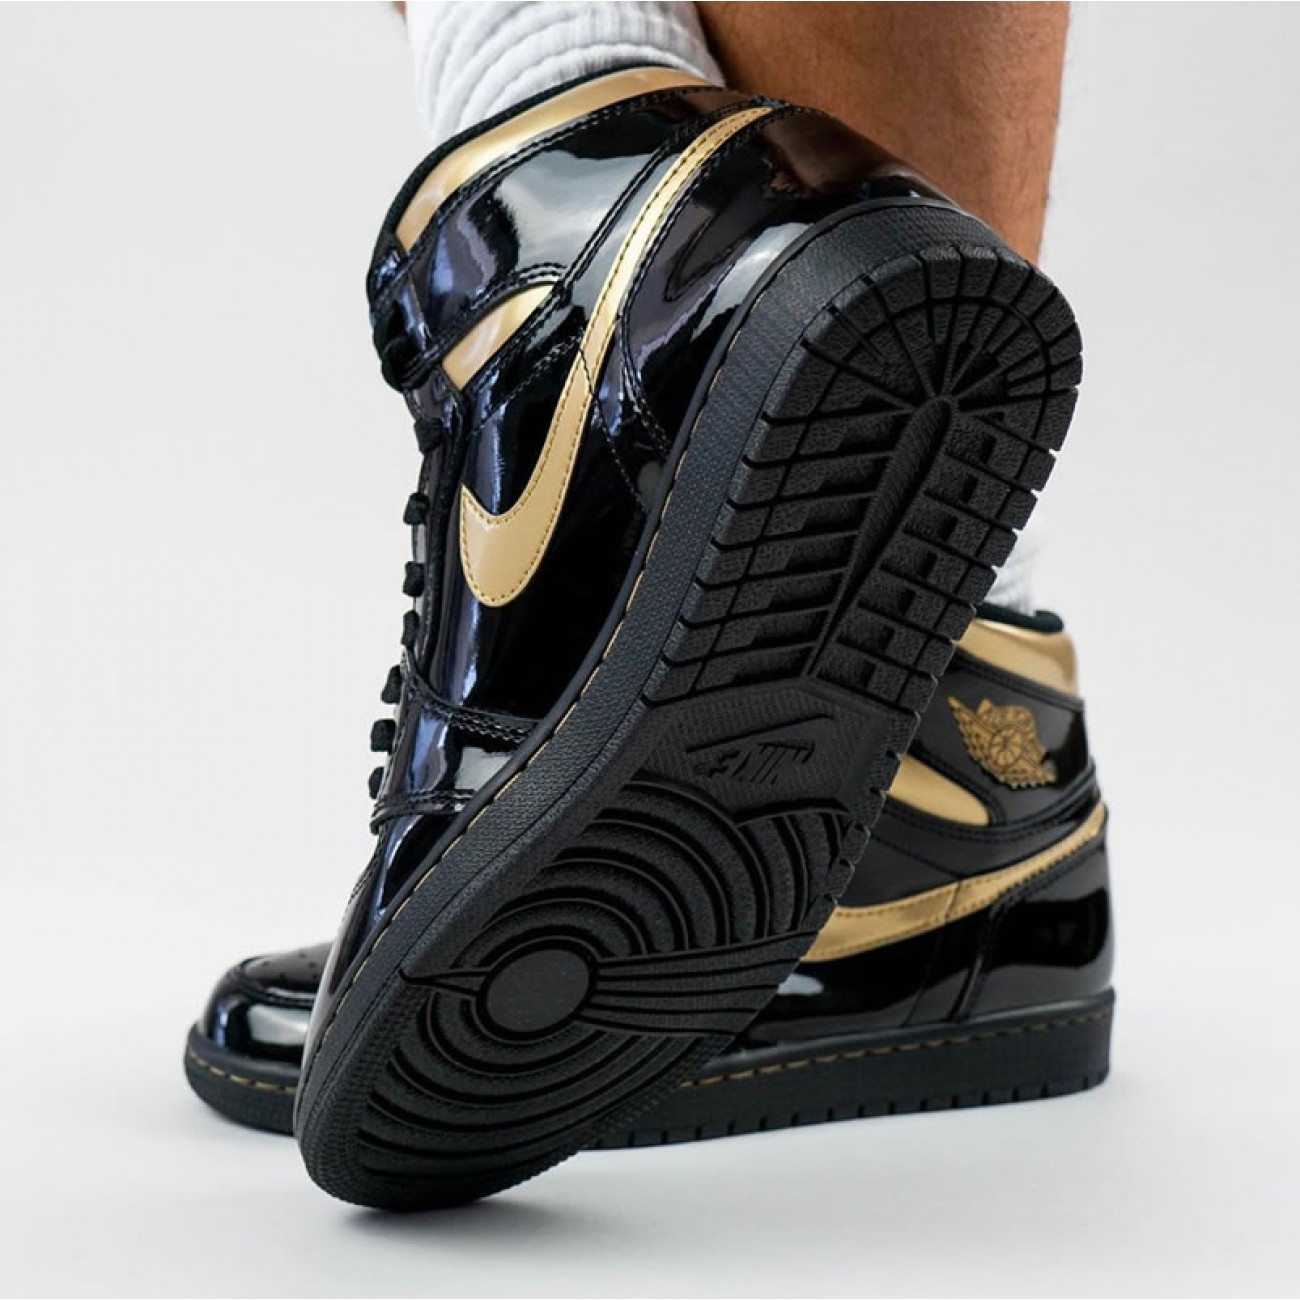 Air Jordan 1 High OG "Black Gold" Patent Leather New Release Date 555088-032